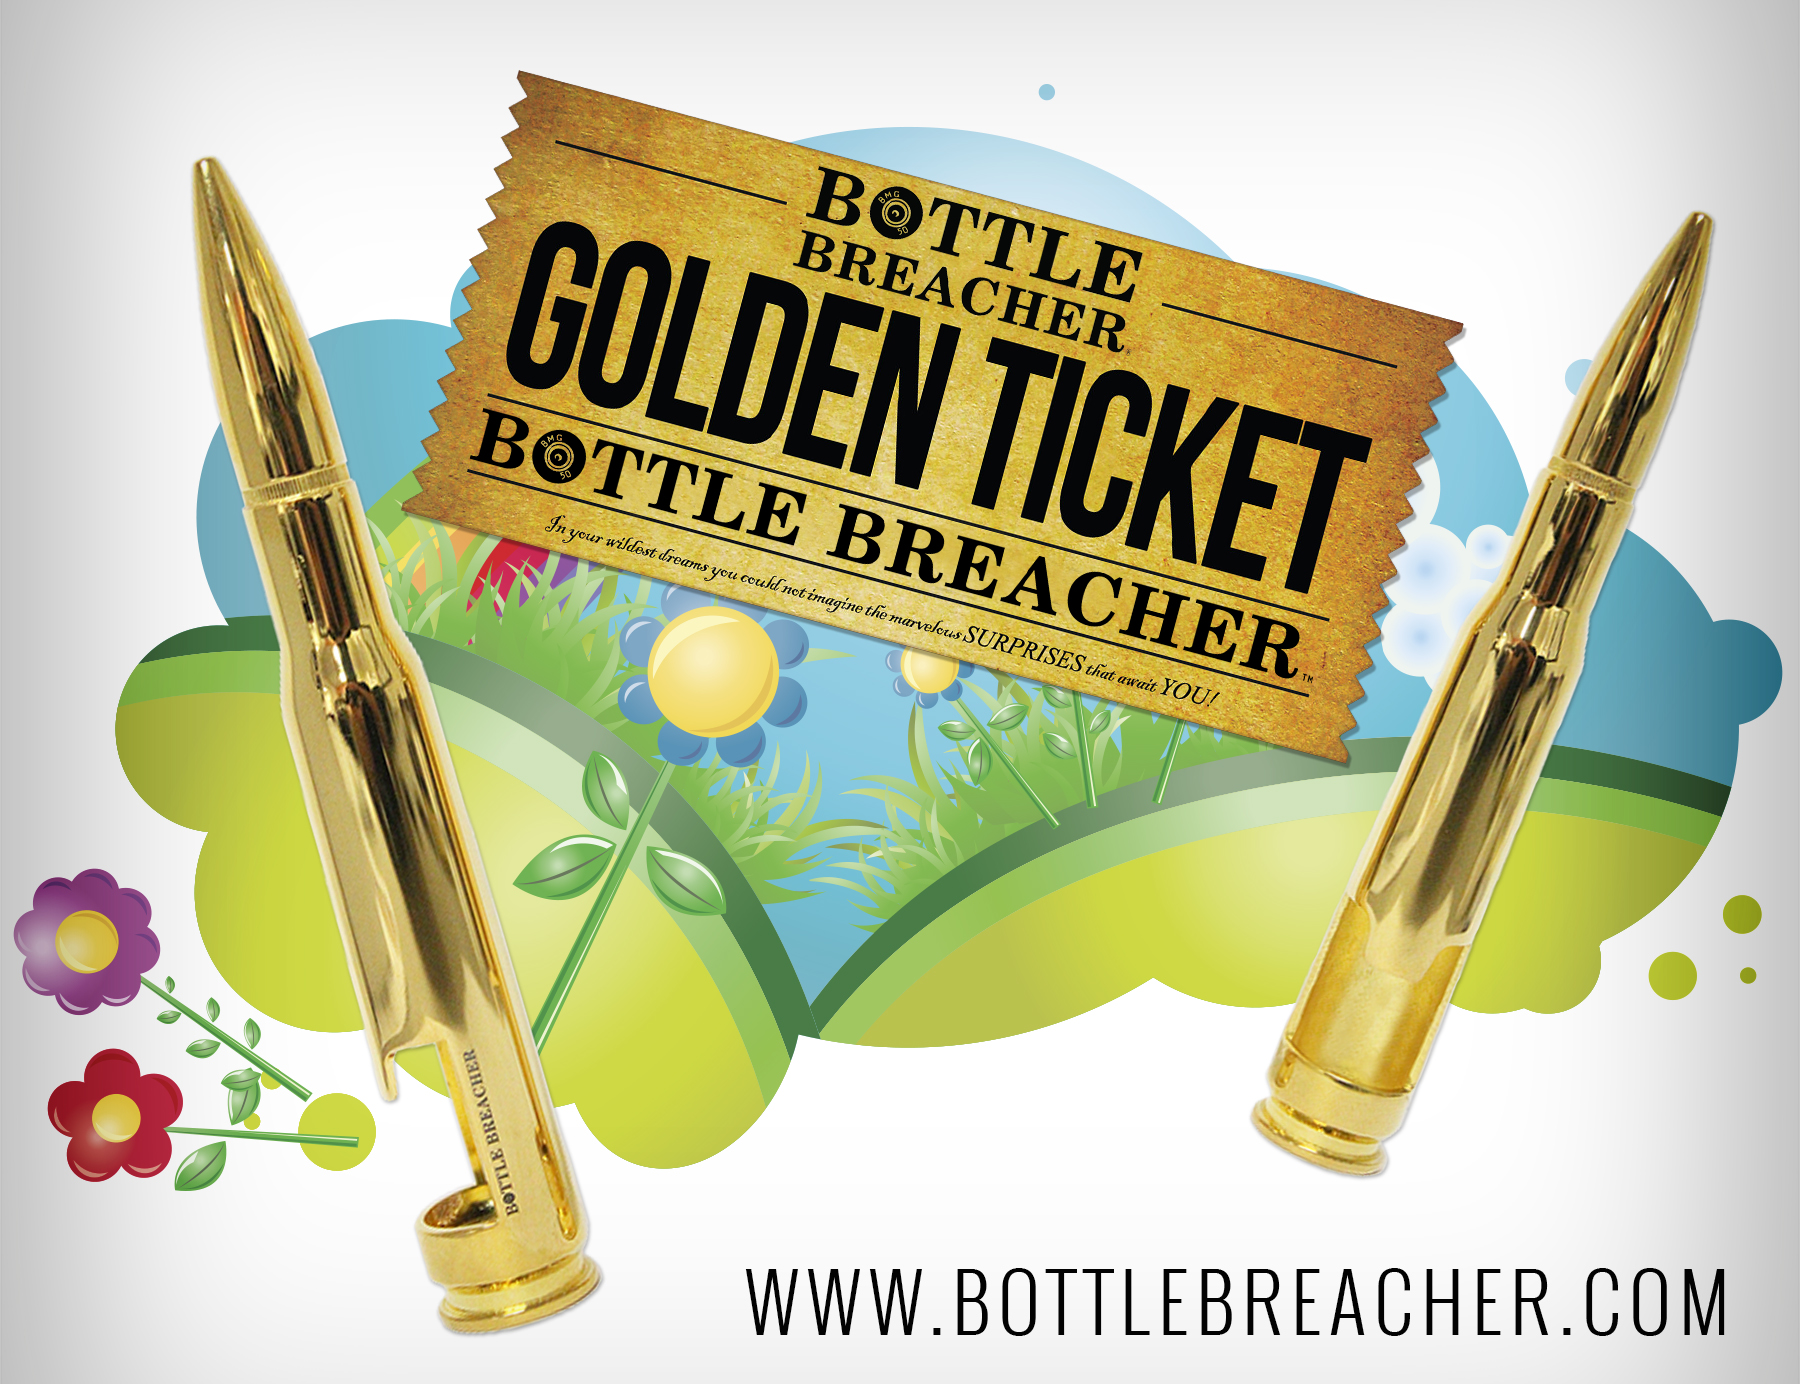 Golden ticket opportunity to win new Bottle Breacher